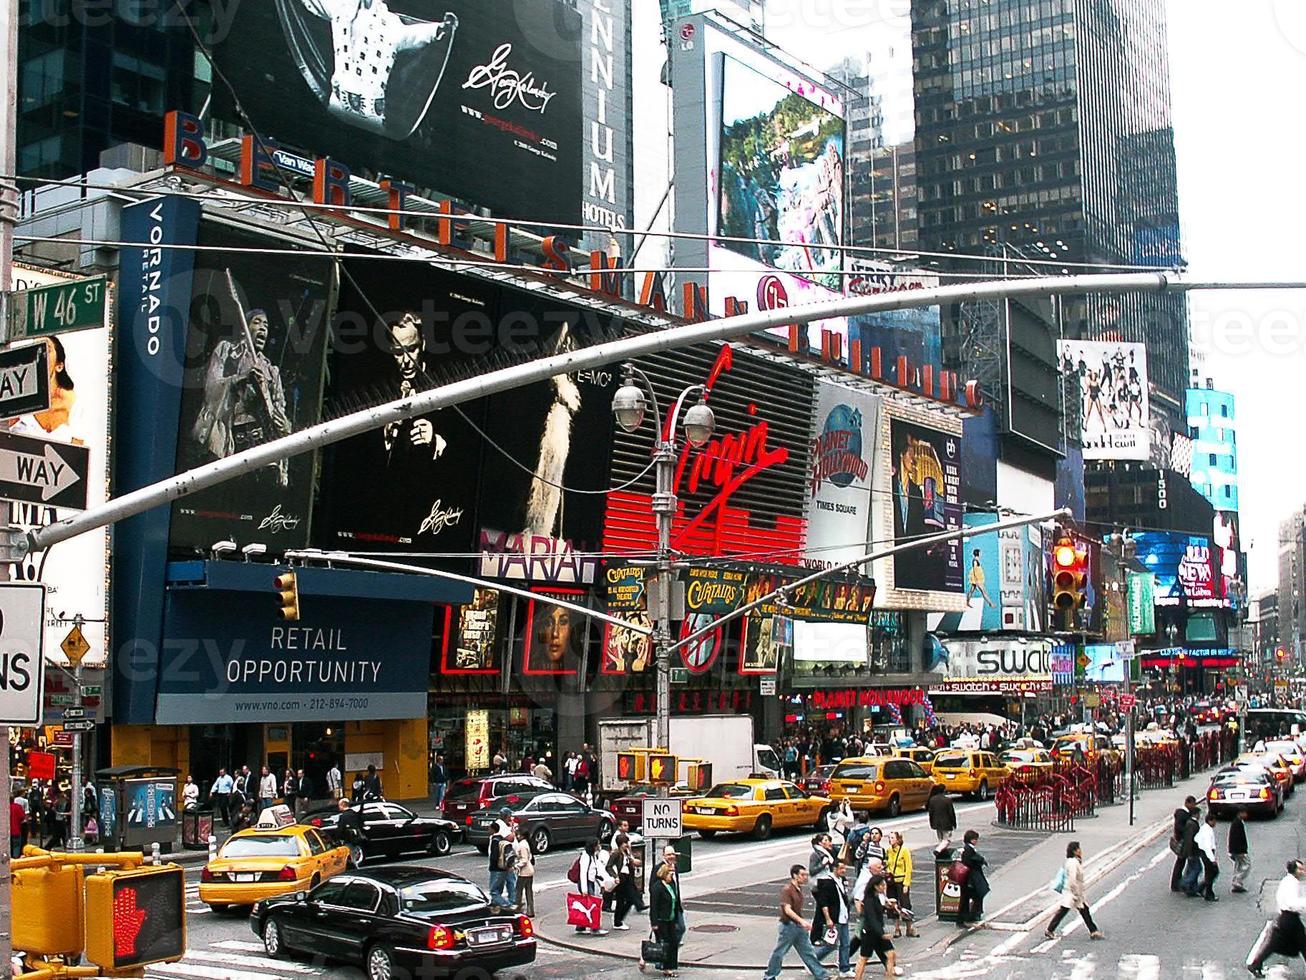 New York City 46th & Broadway photo